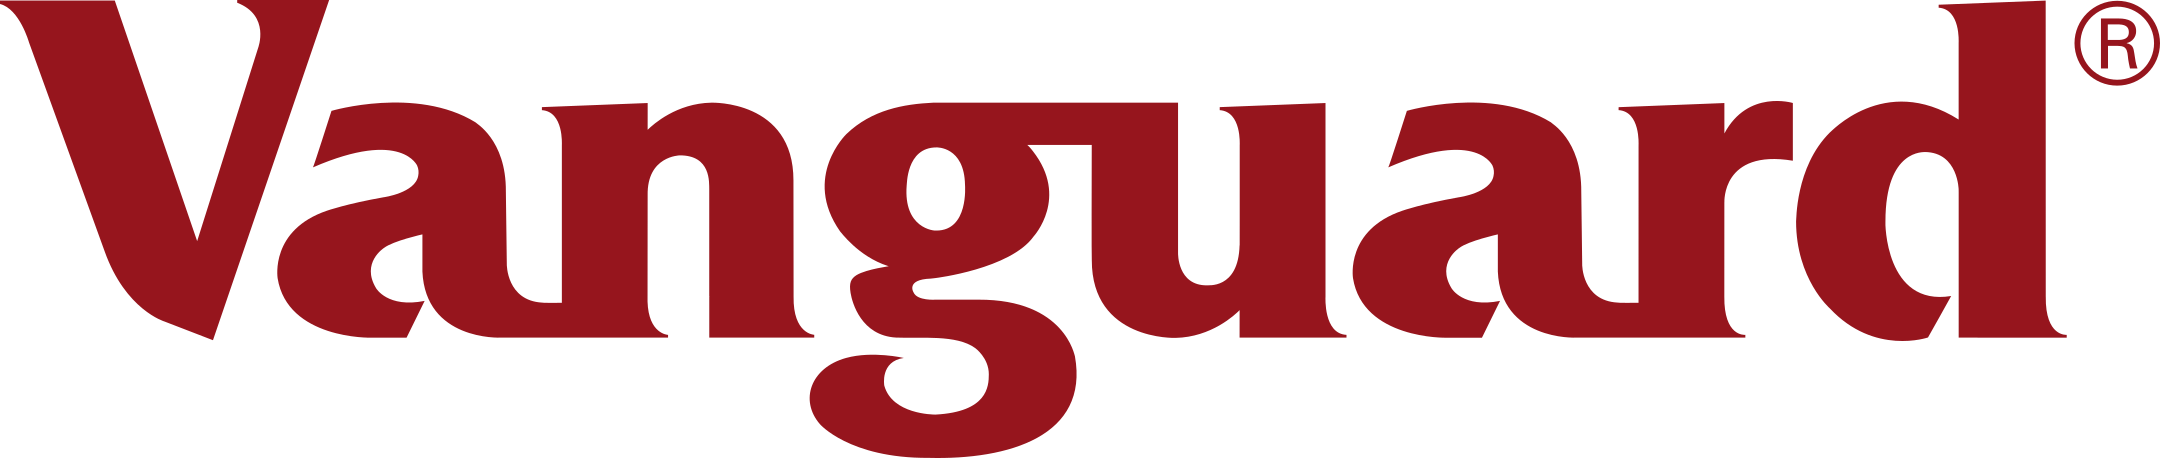 Vanguard Logo.